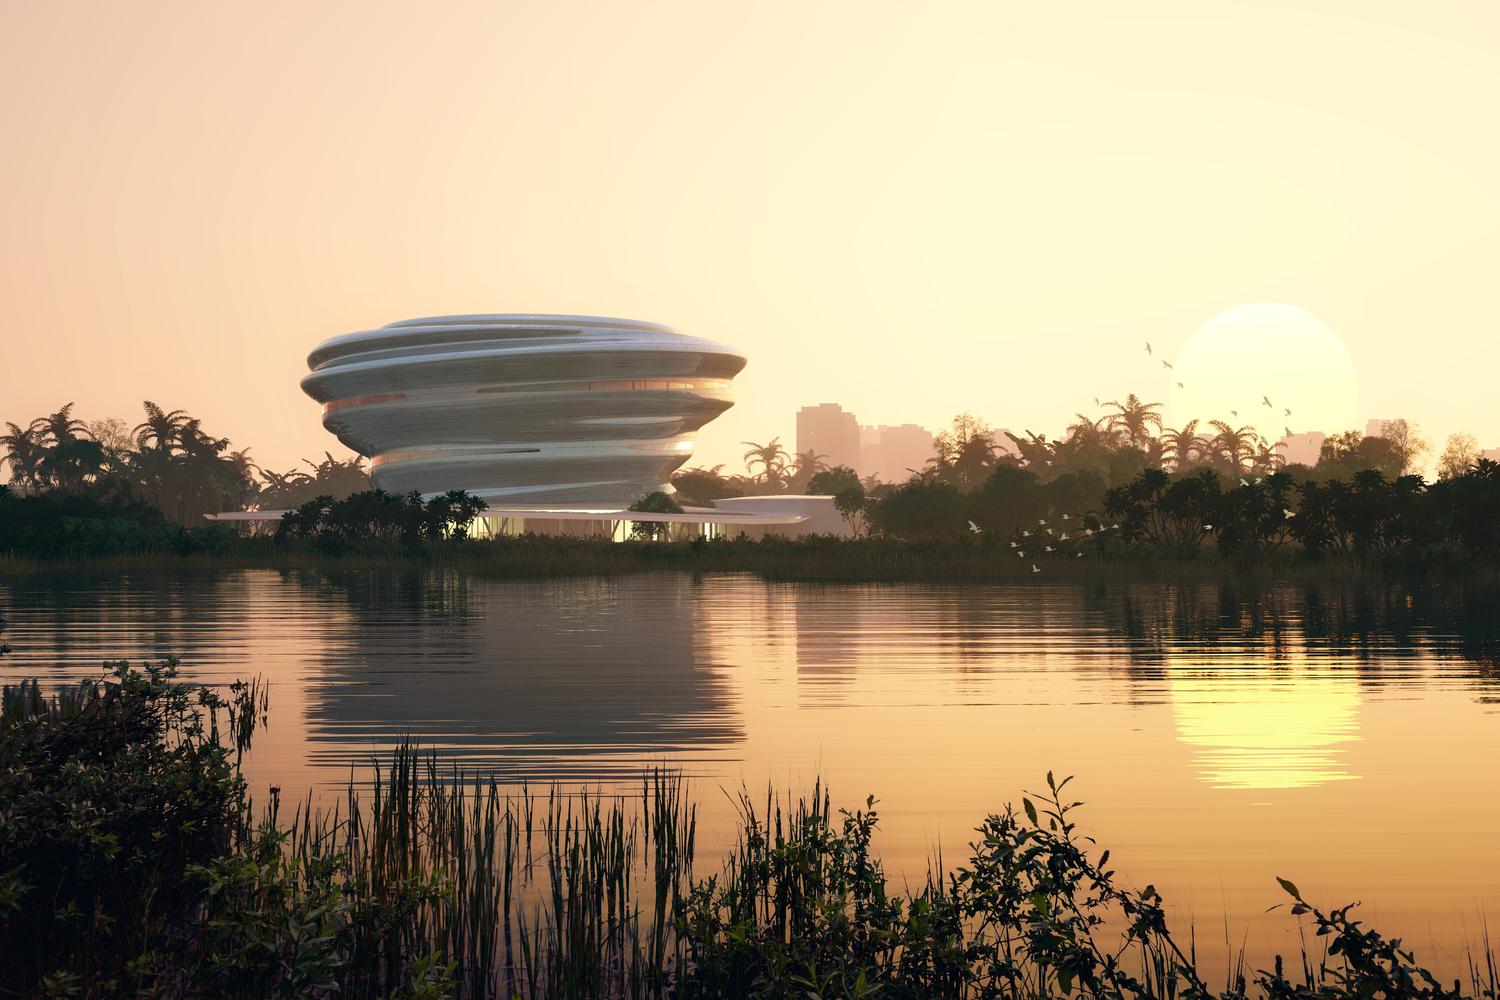 MAD设计海南科技馆，创造“原始雨林与未来科技相遇”的情境.jpg